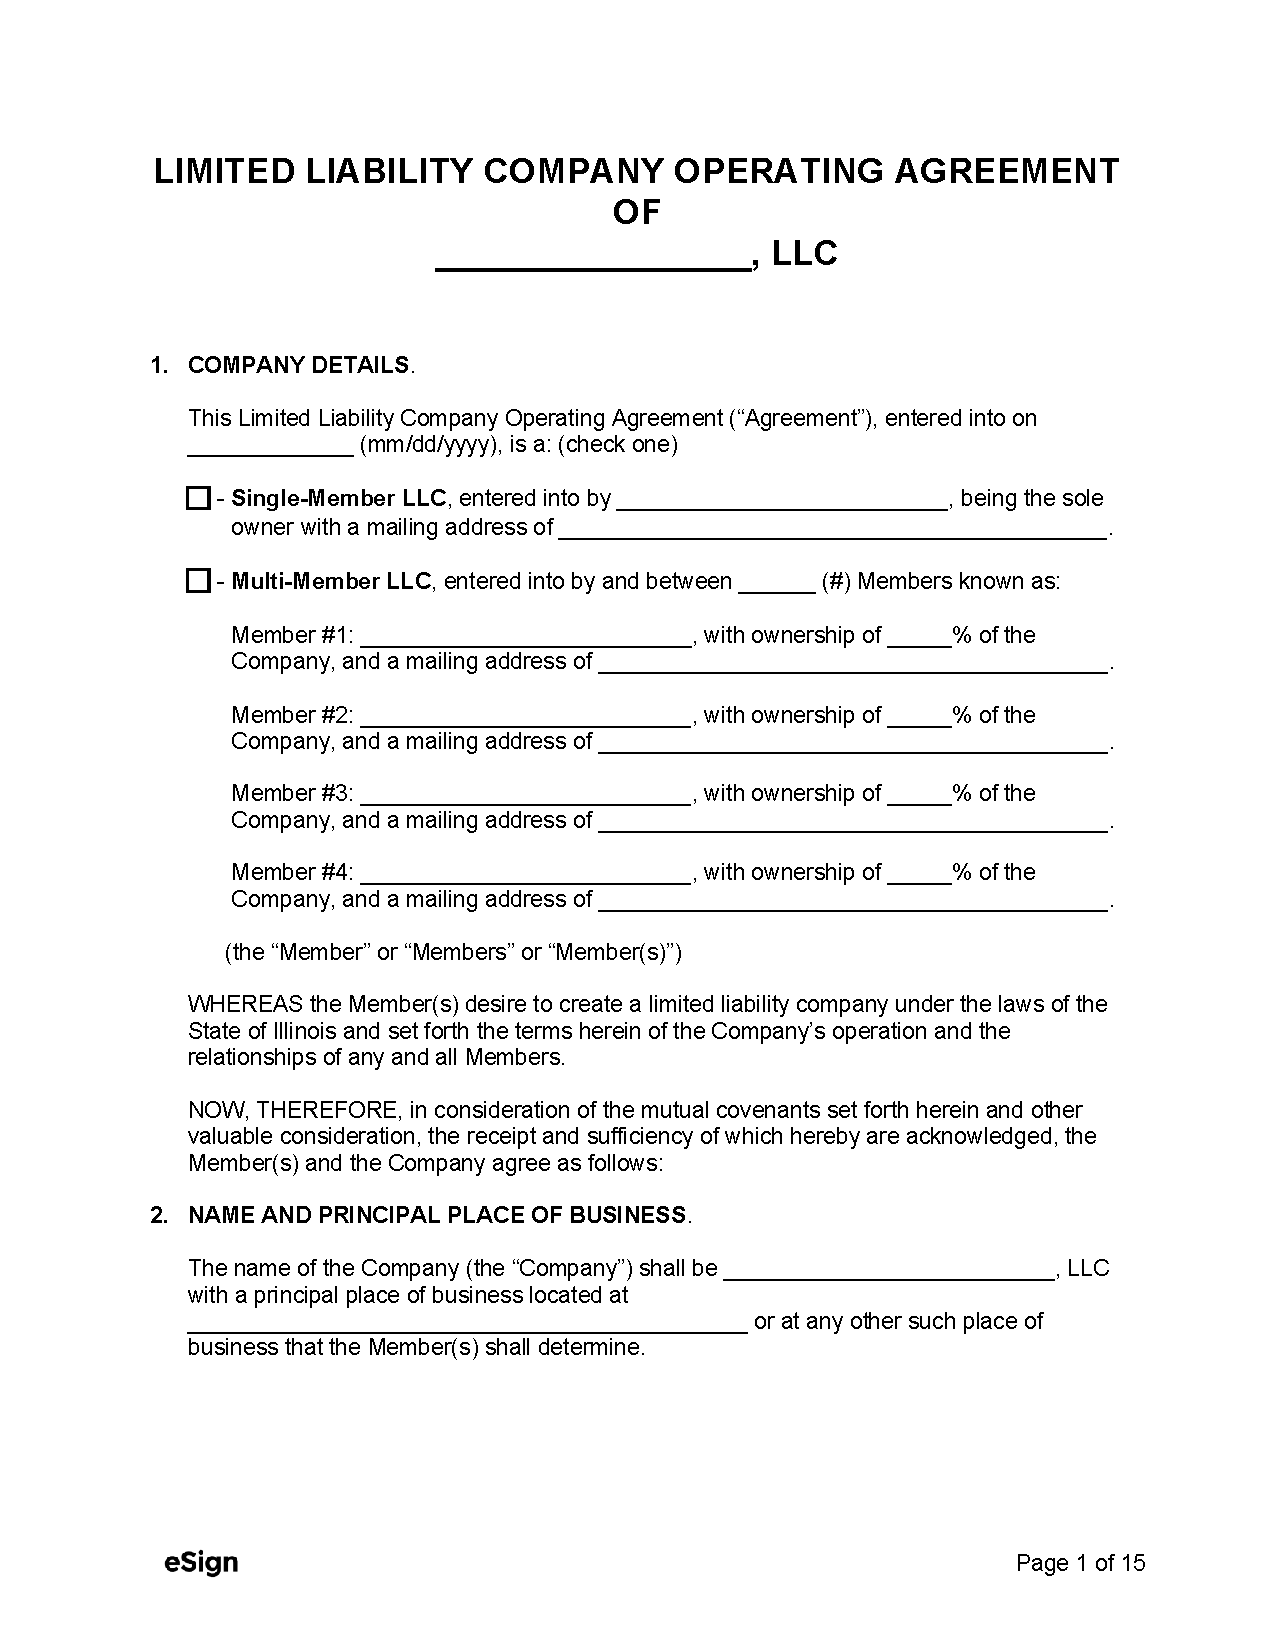 operating agreement llc illinois pdf